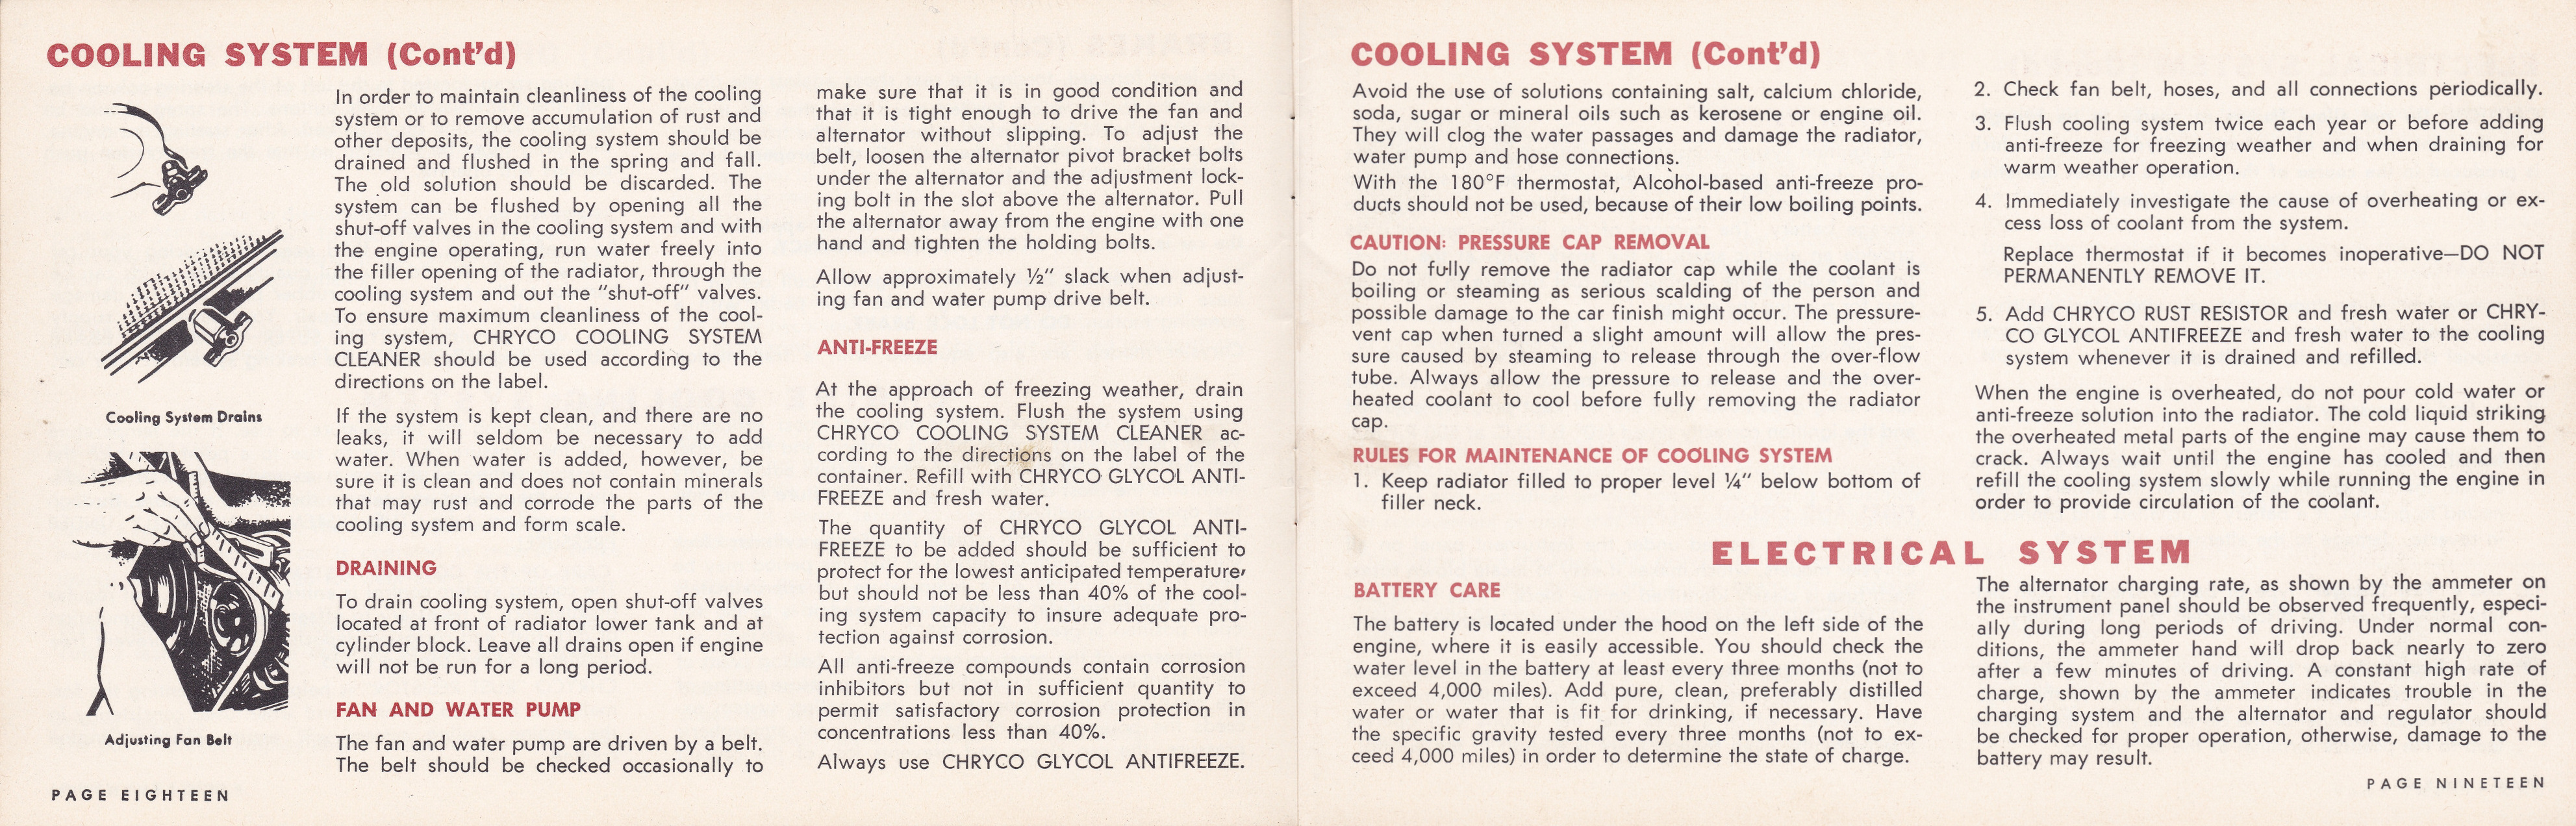 1964_Chrysler_Owners_Manual_Cdn-18-19